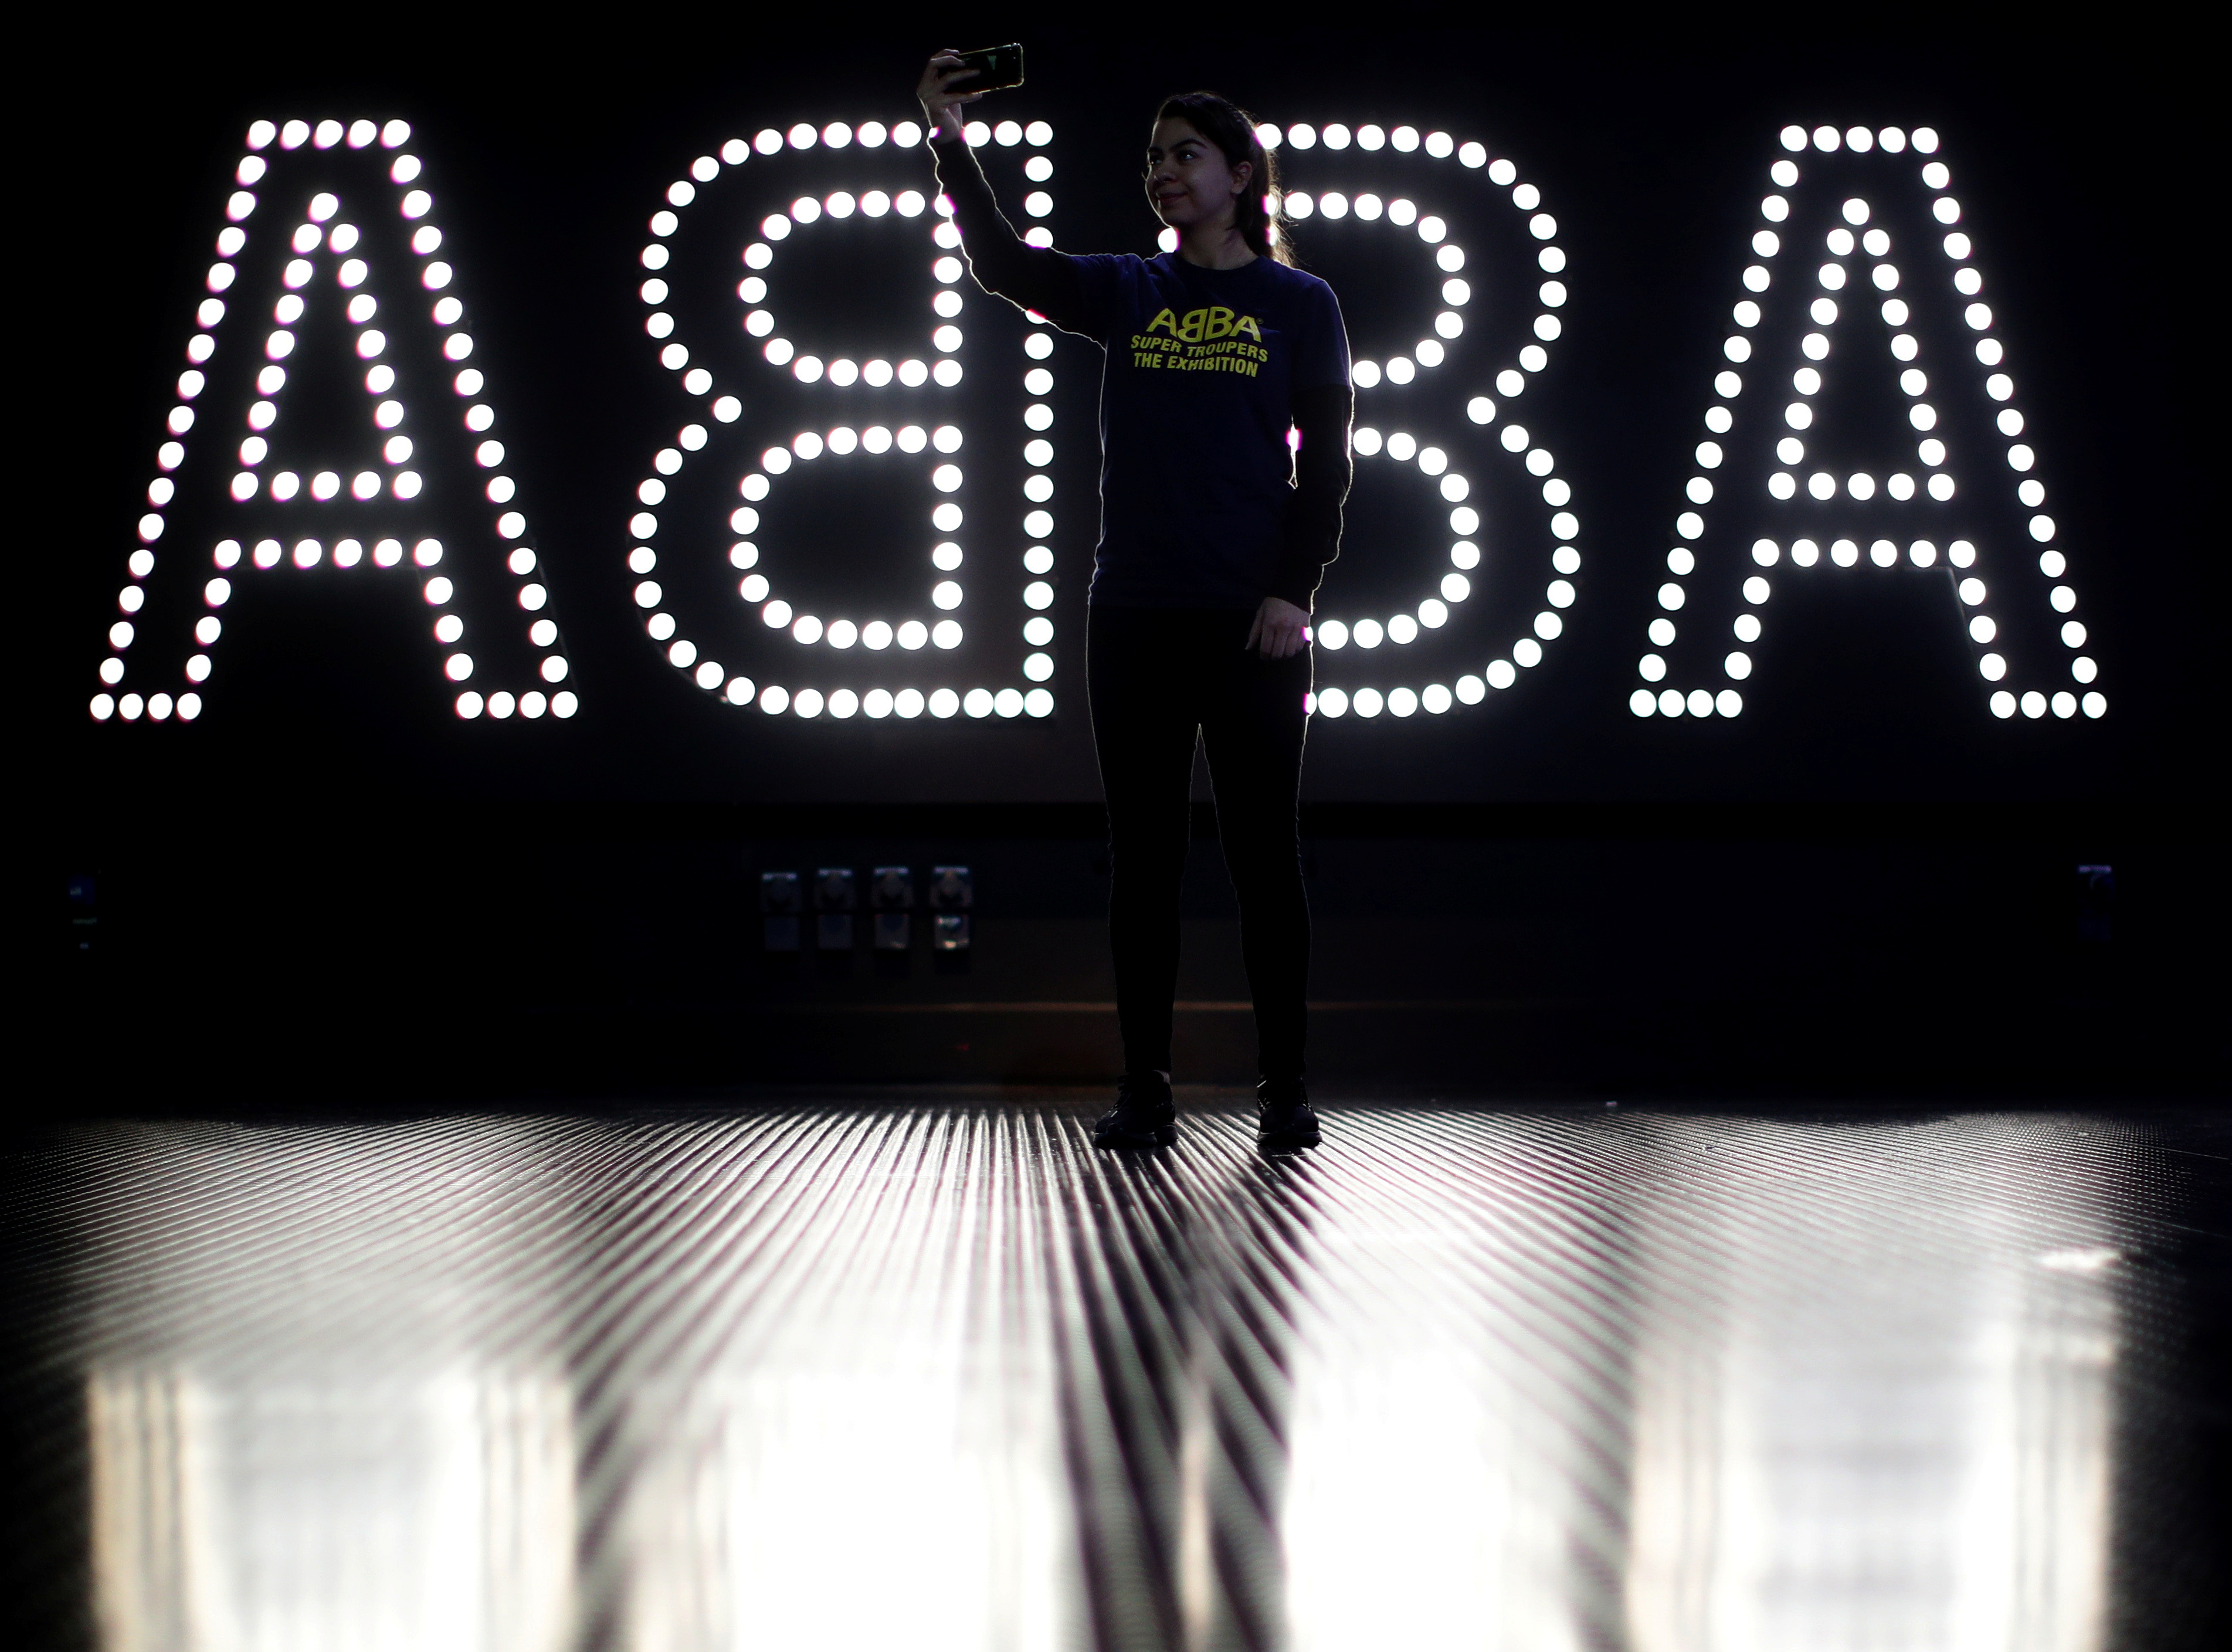 “Super Trouper”: Exhibición de ABBA se inaugura en Londres